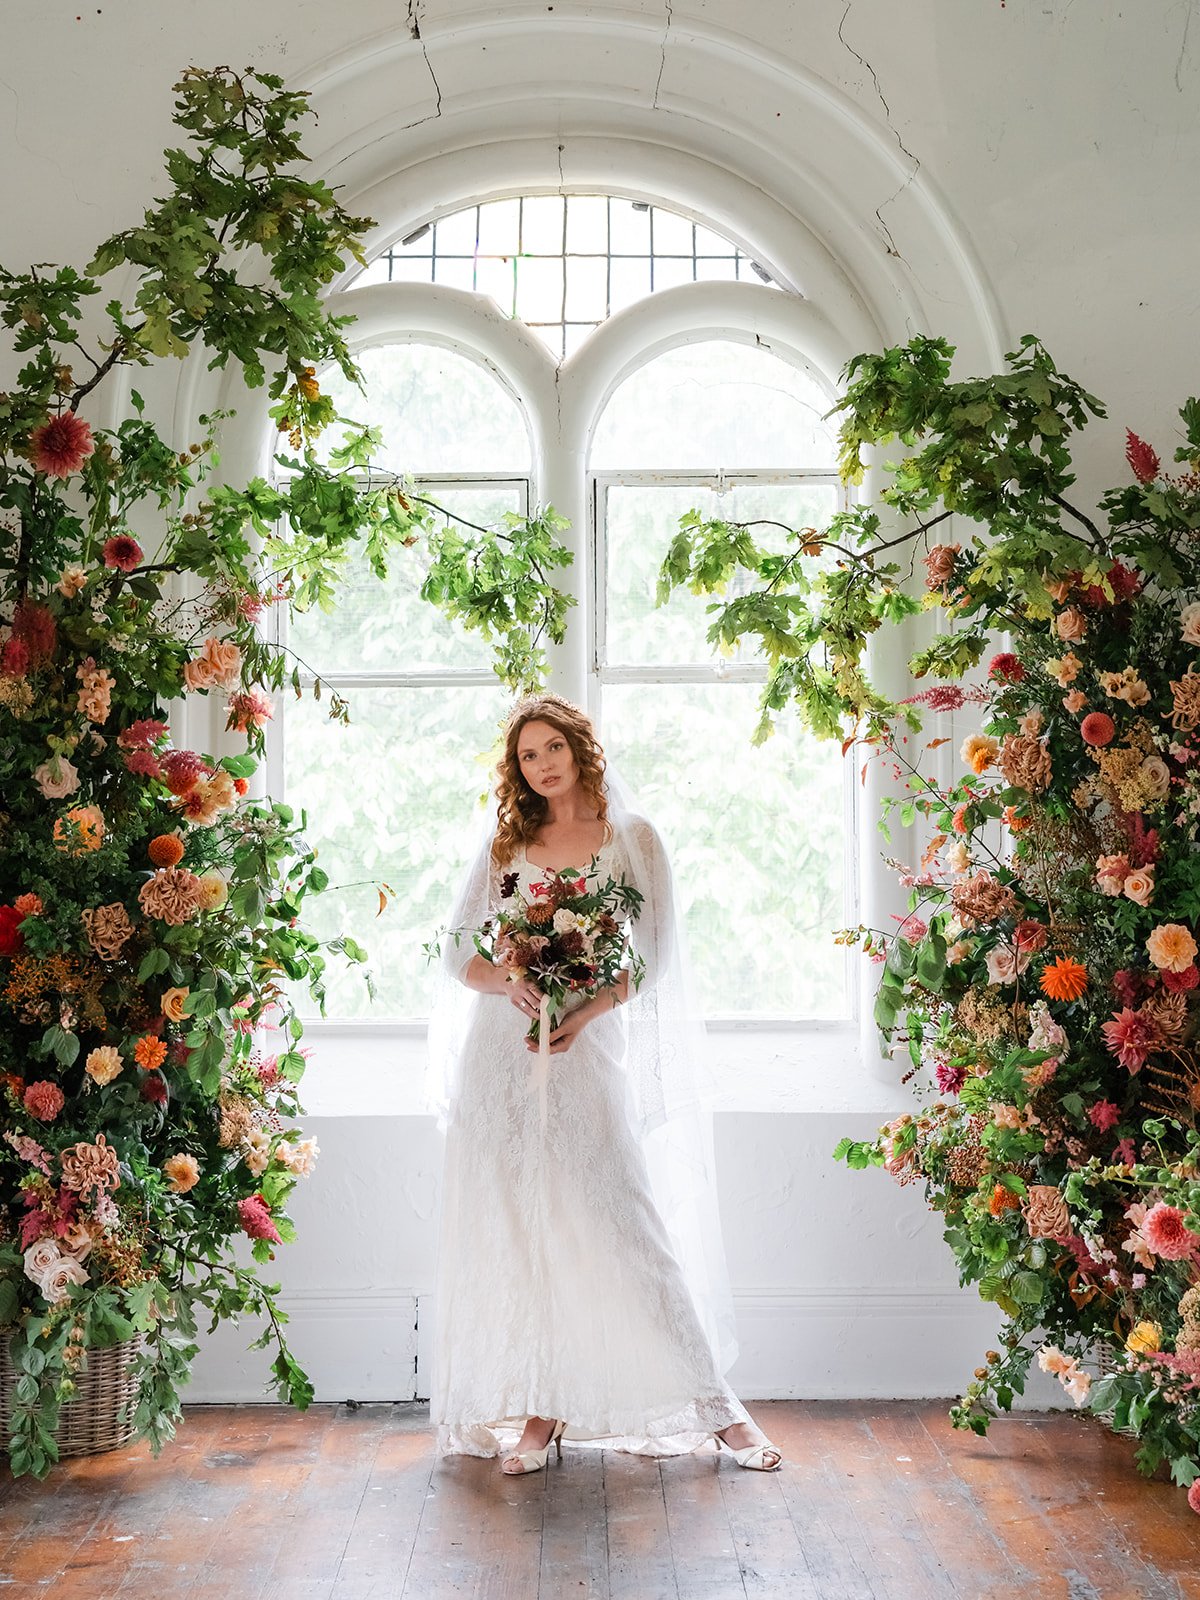 Bath wedding flower installation with bride and bridal bouquet